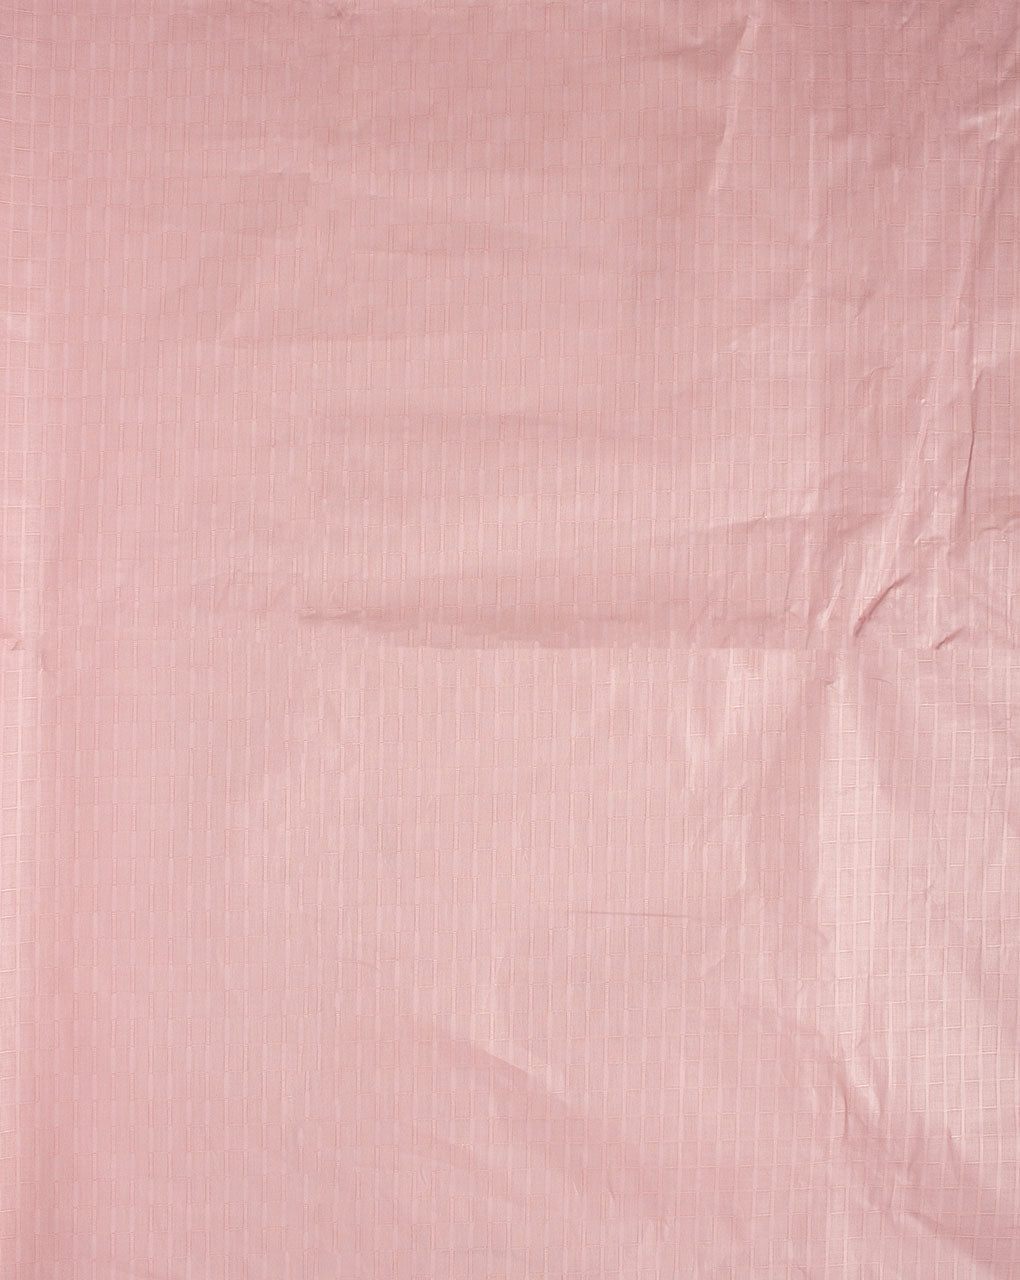 Pink Cotton Fabric at Rs 150/meter in Mumbai